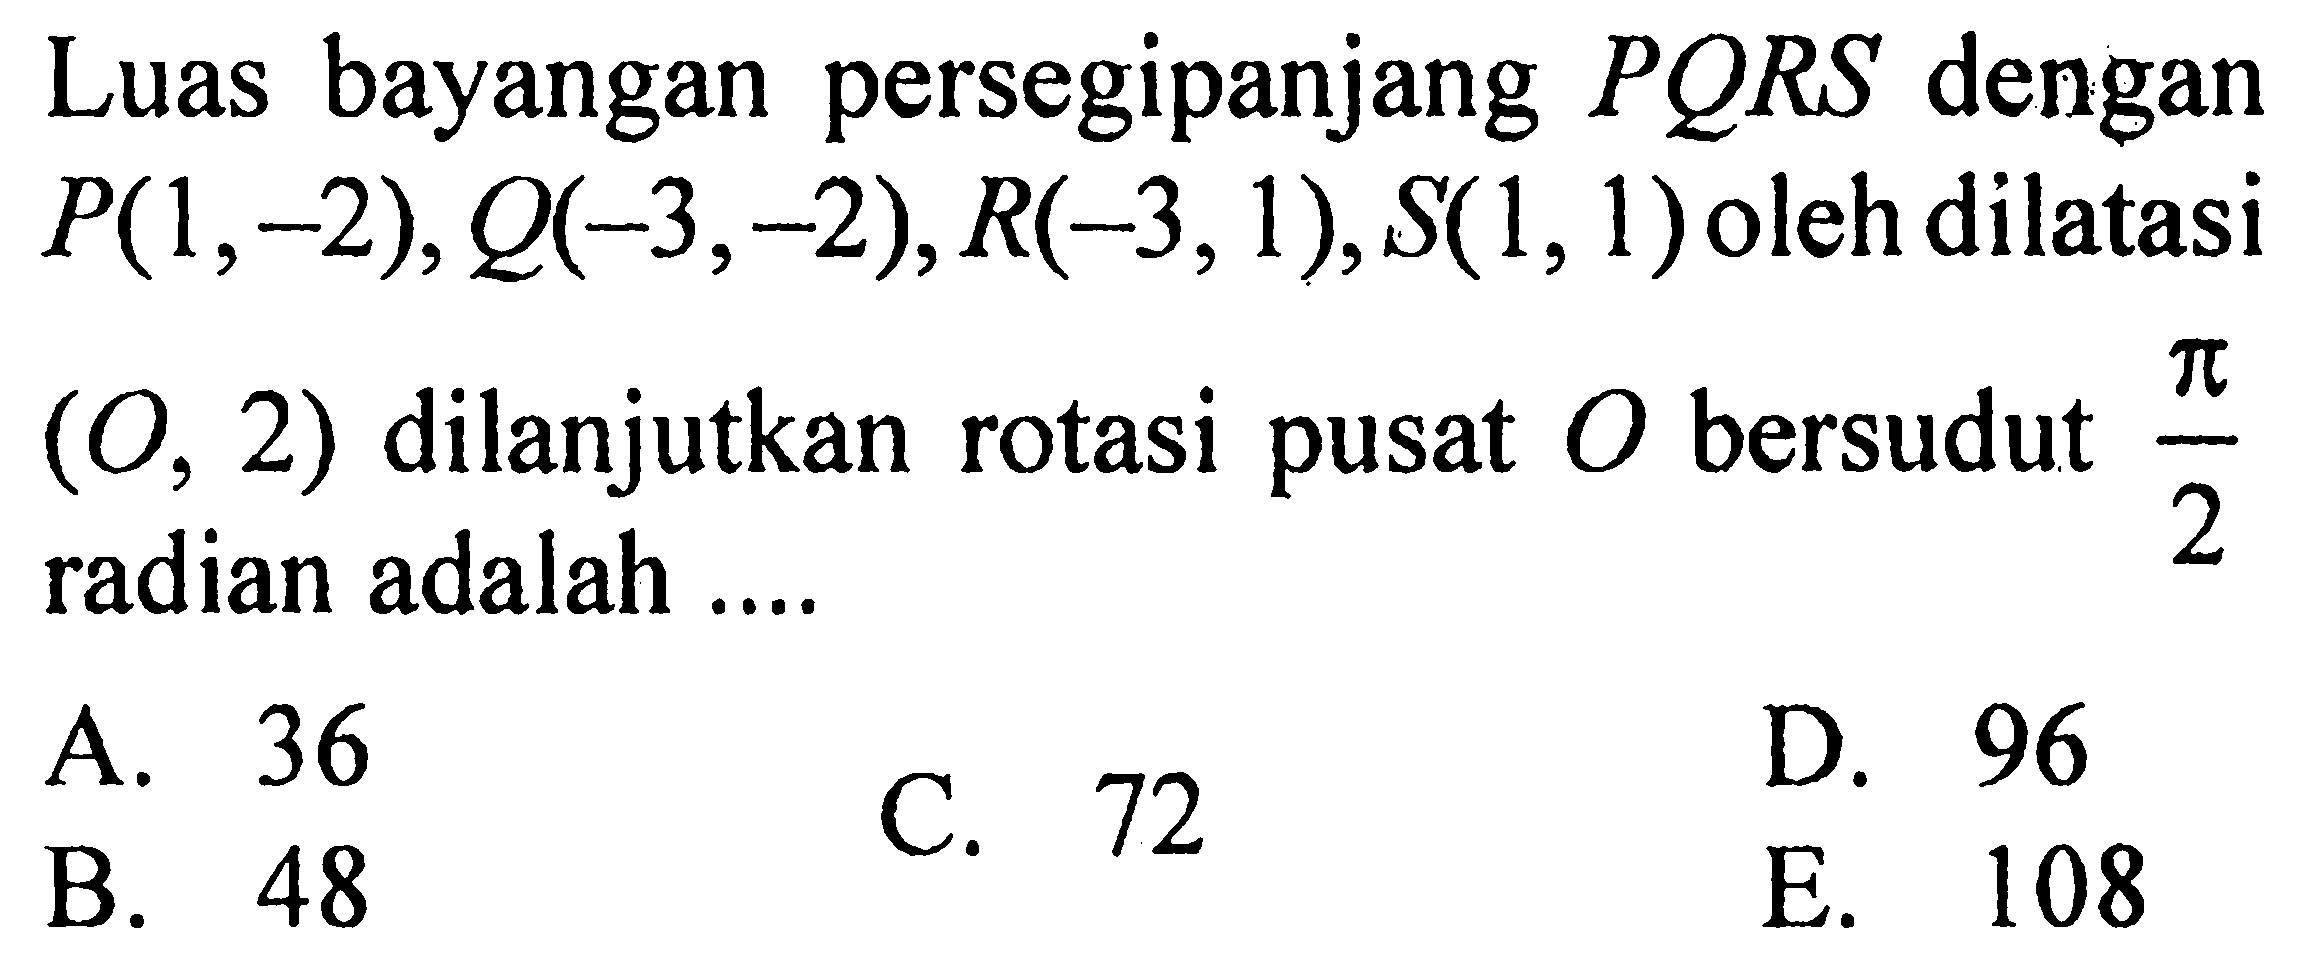 Luas bayangan persegipanjang  PQRS  dengan  P(1,-2), Q(-3,-2), R(-3,1), S(1,1)  oleh dilatasi  (O, 2)  dilanjutkan rotasi pusat  O  bersudut  pi/2  radian adalah ....